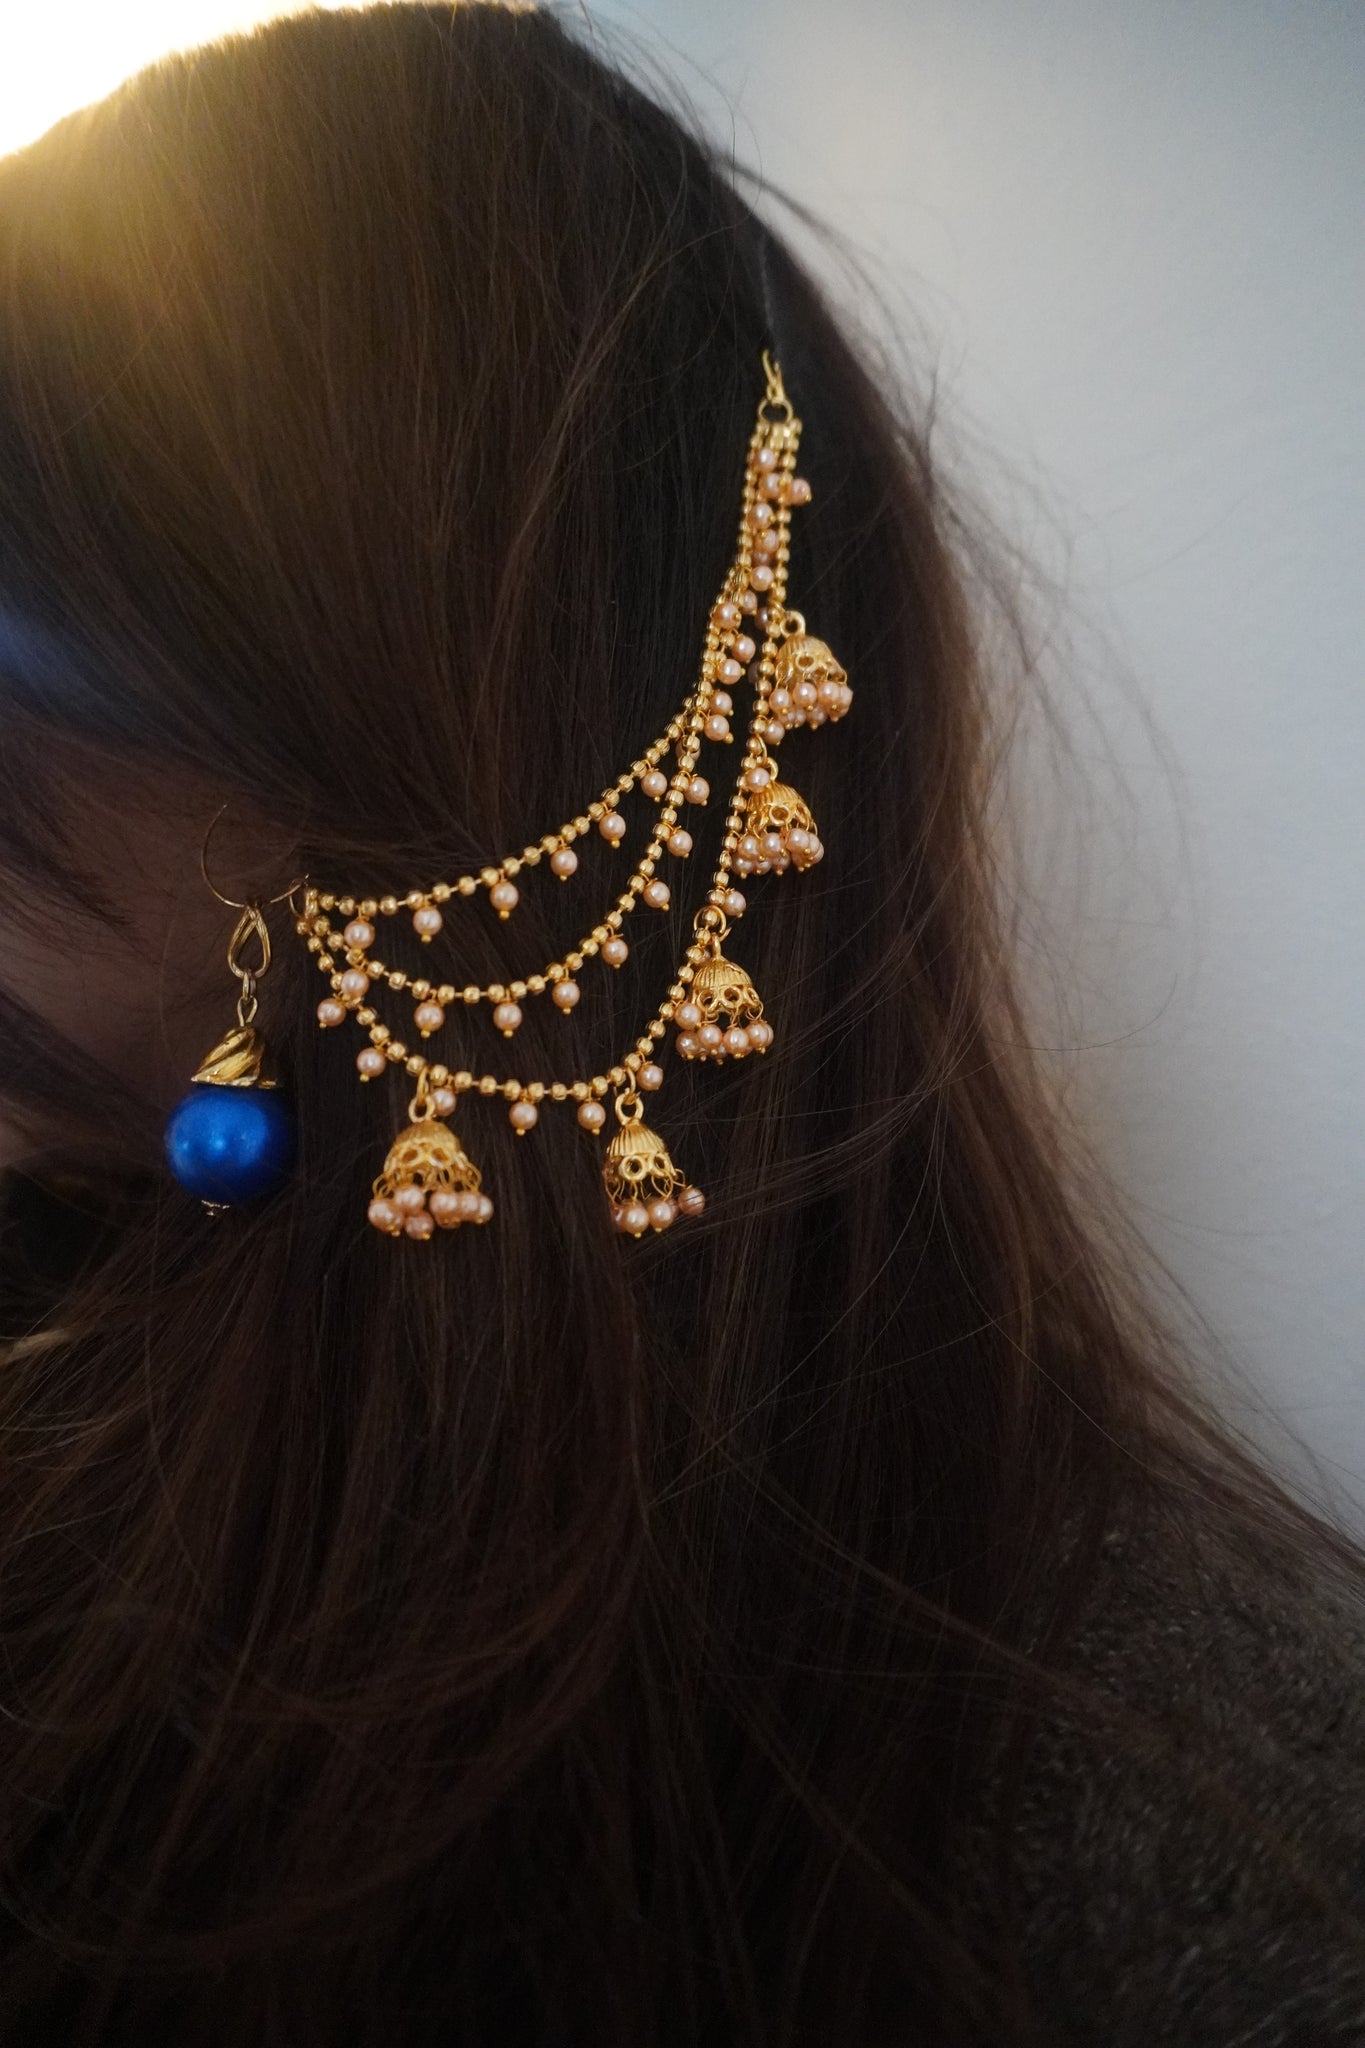 Hair chain earrings